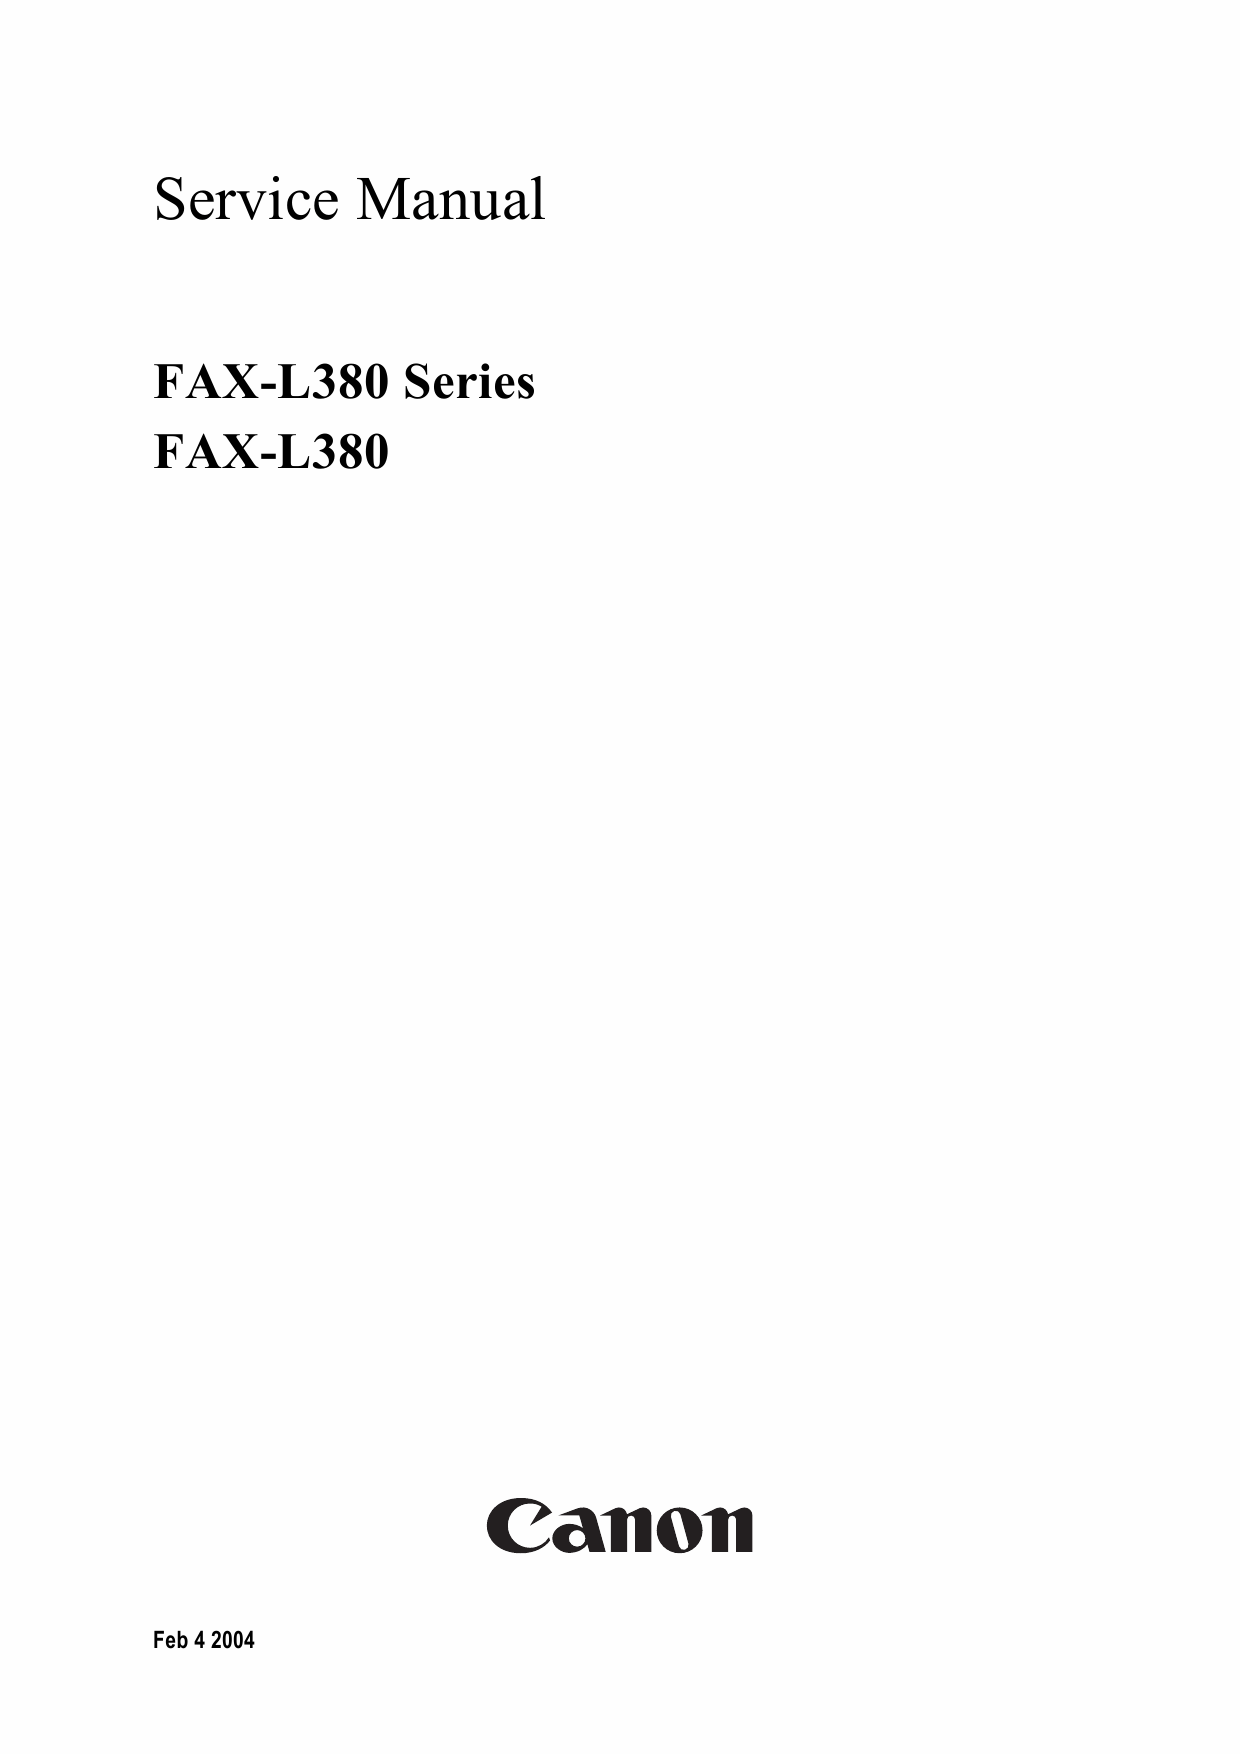 Canon FAX L380 Parts and Service Manual-1